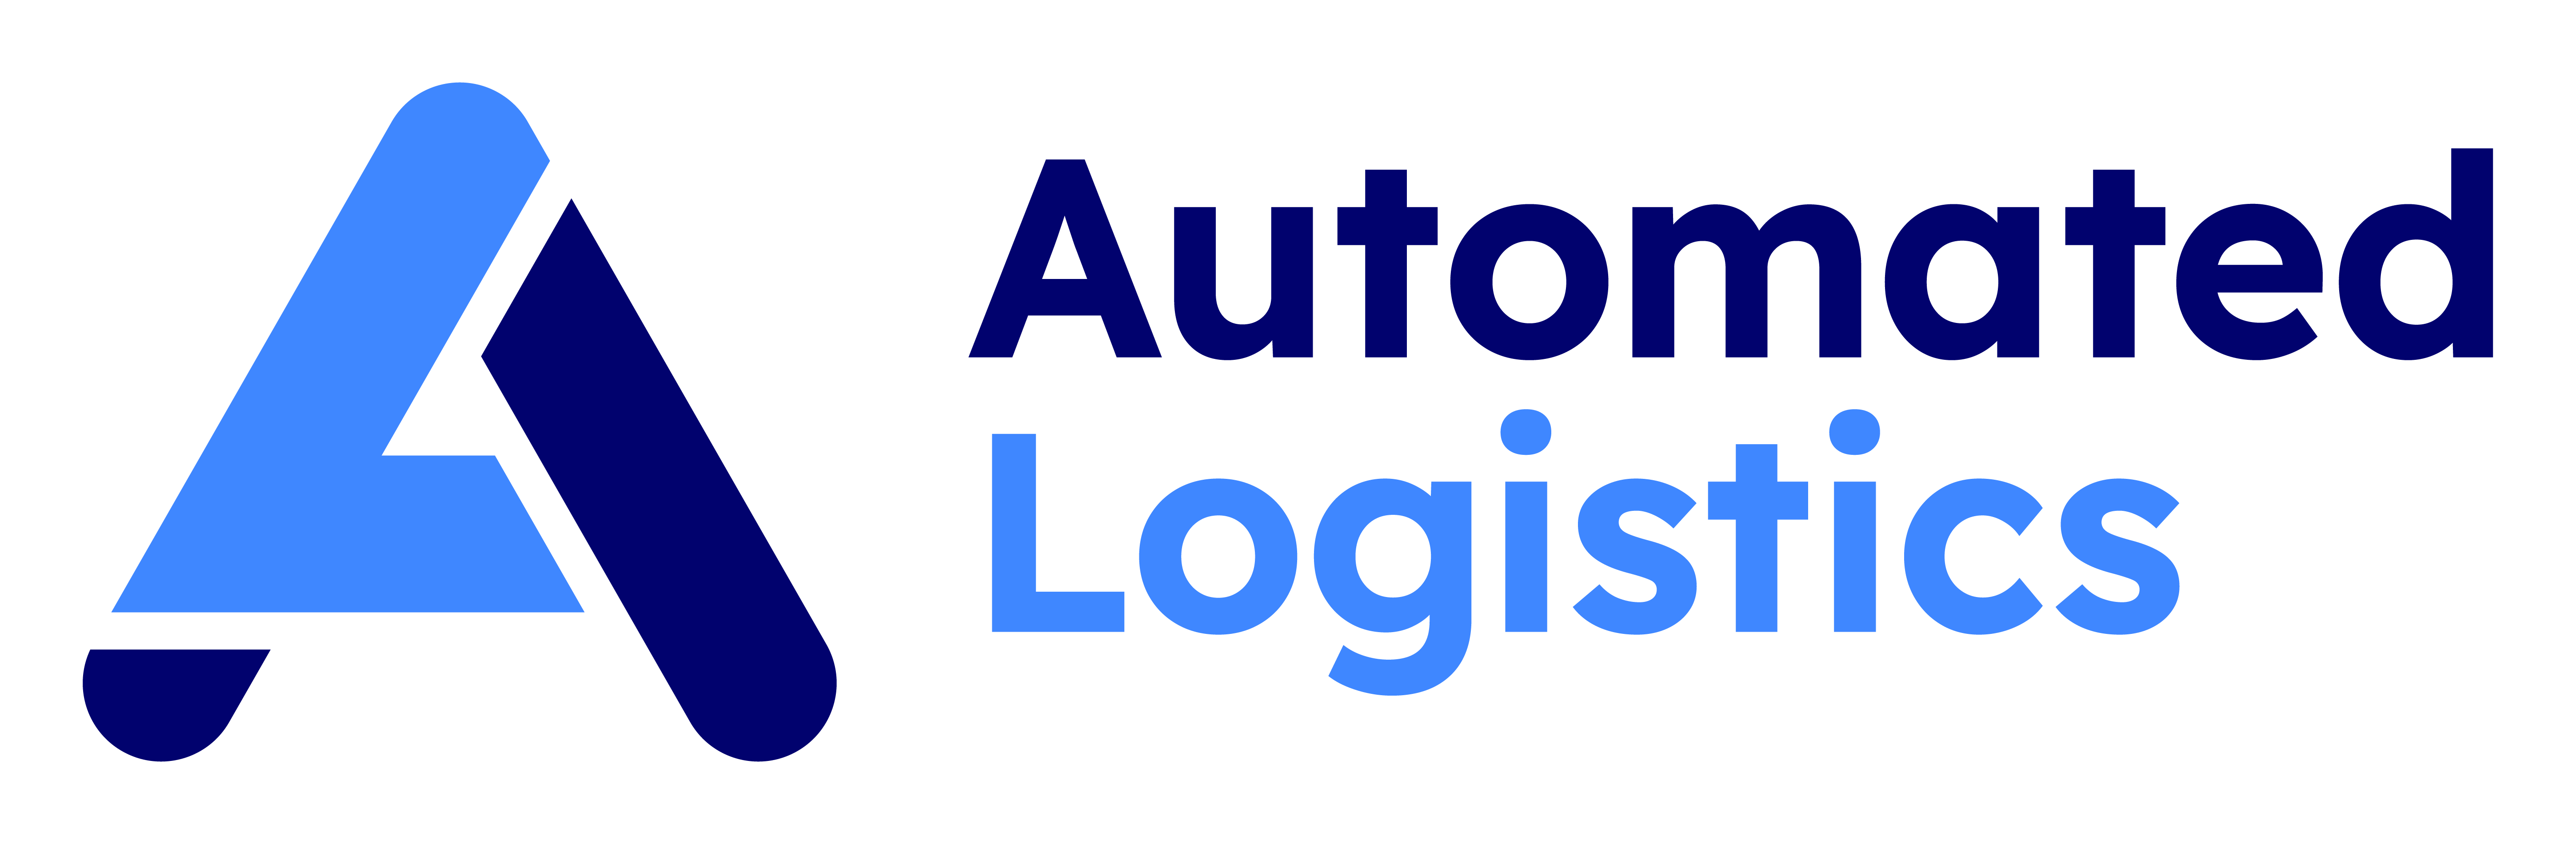 Automated logistics